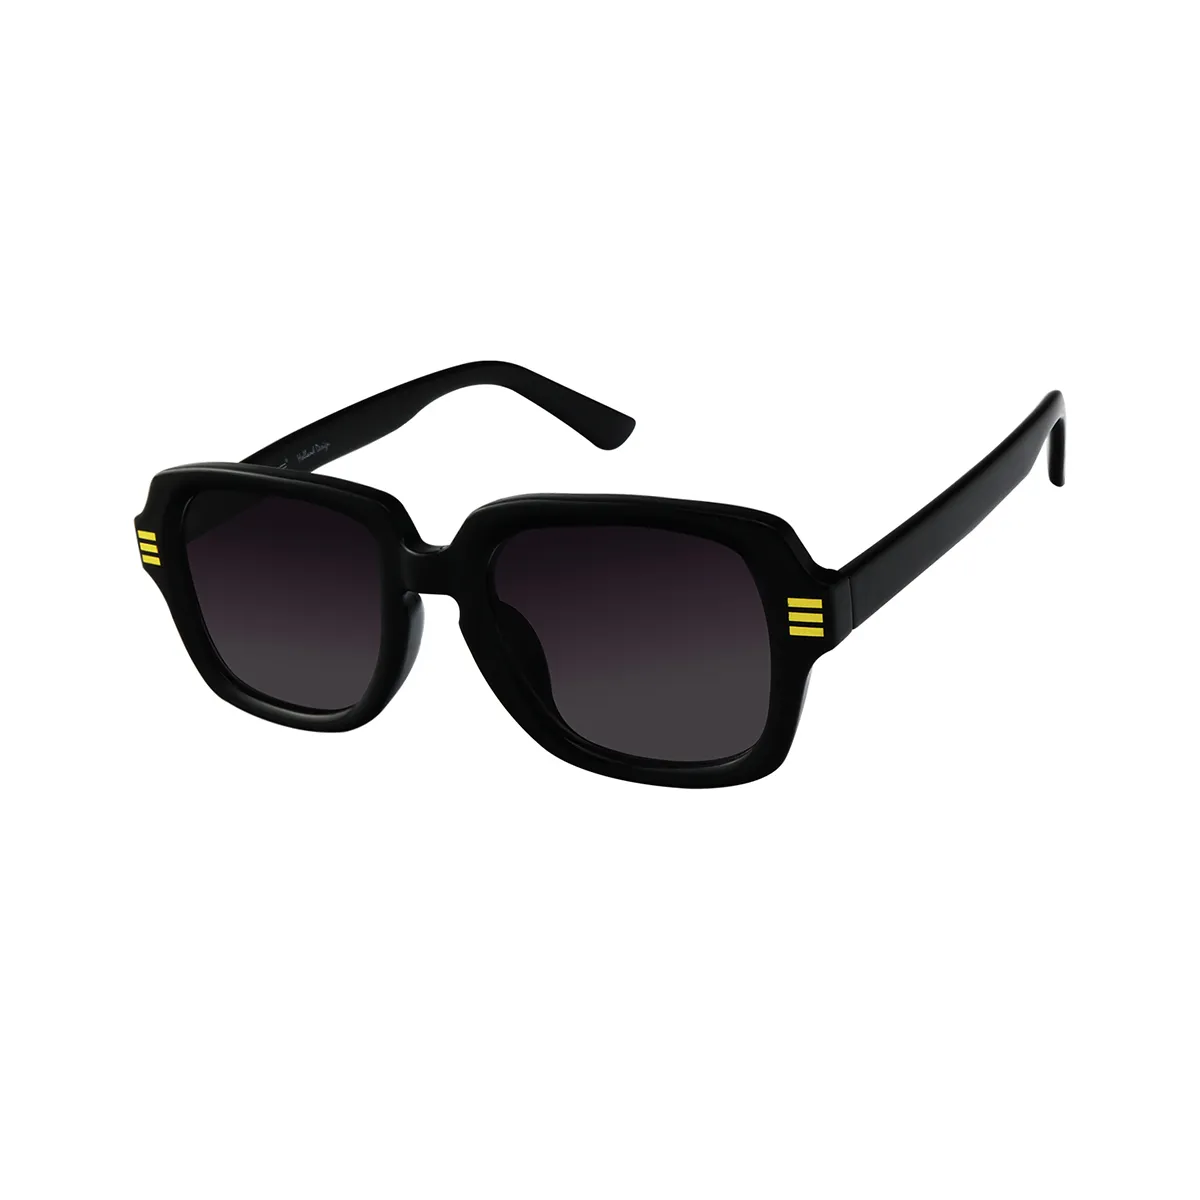 Foena - Square Black Sunglasses for Women